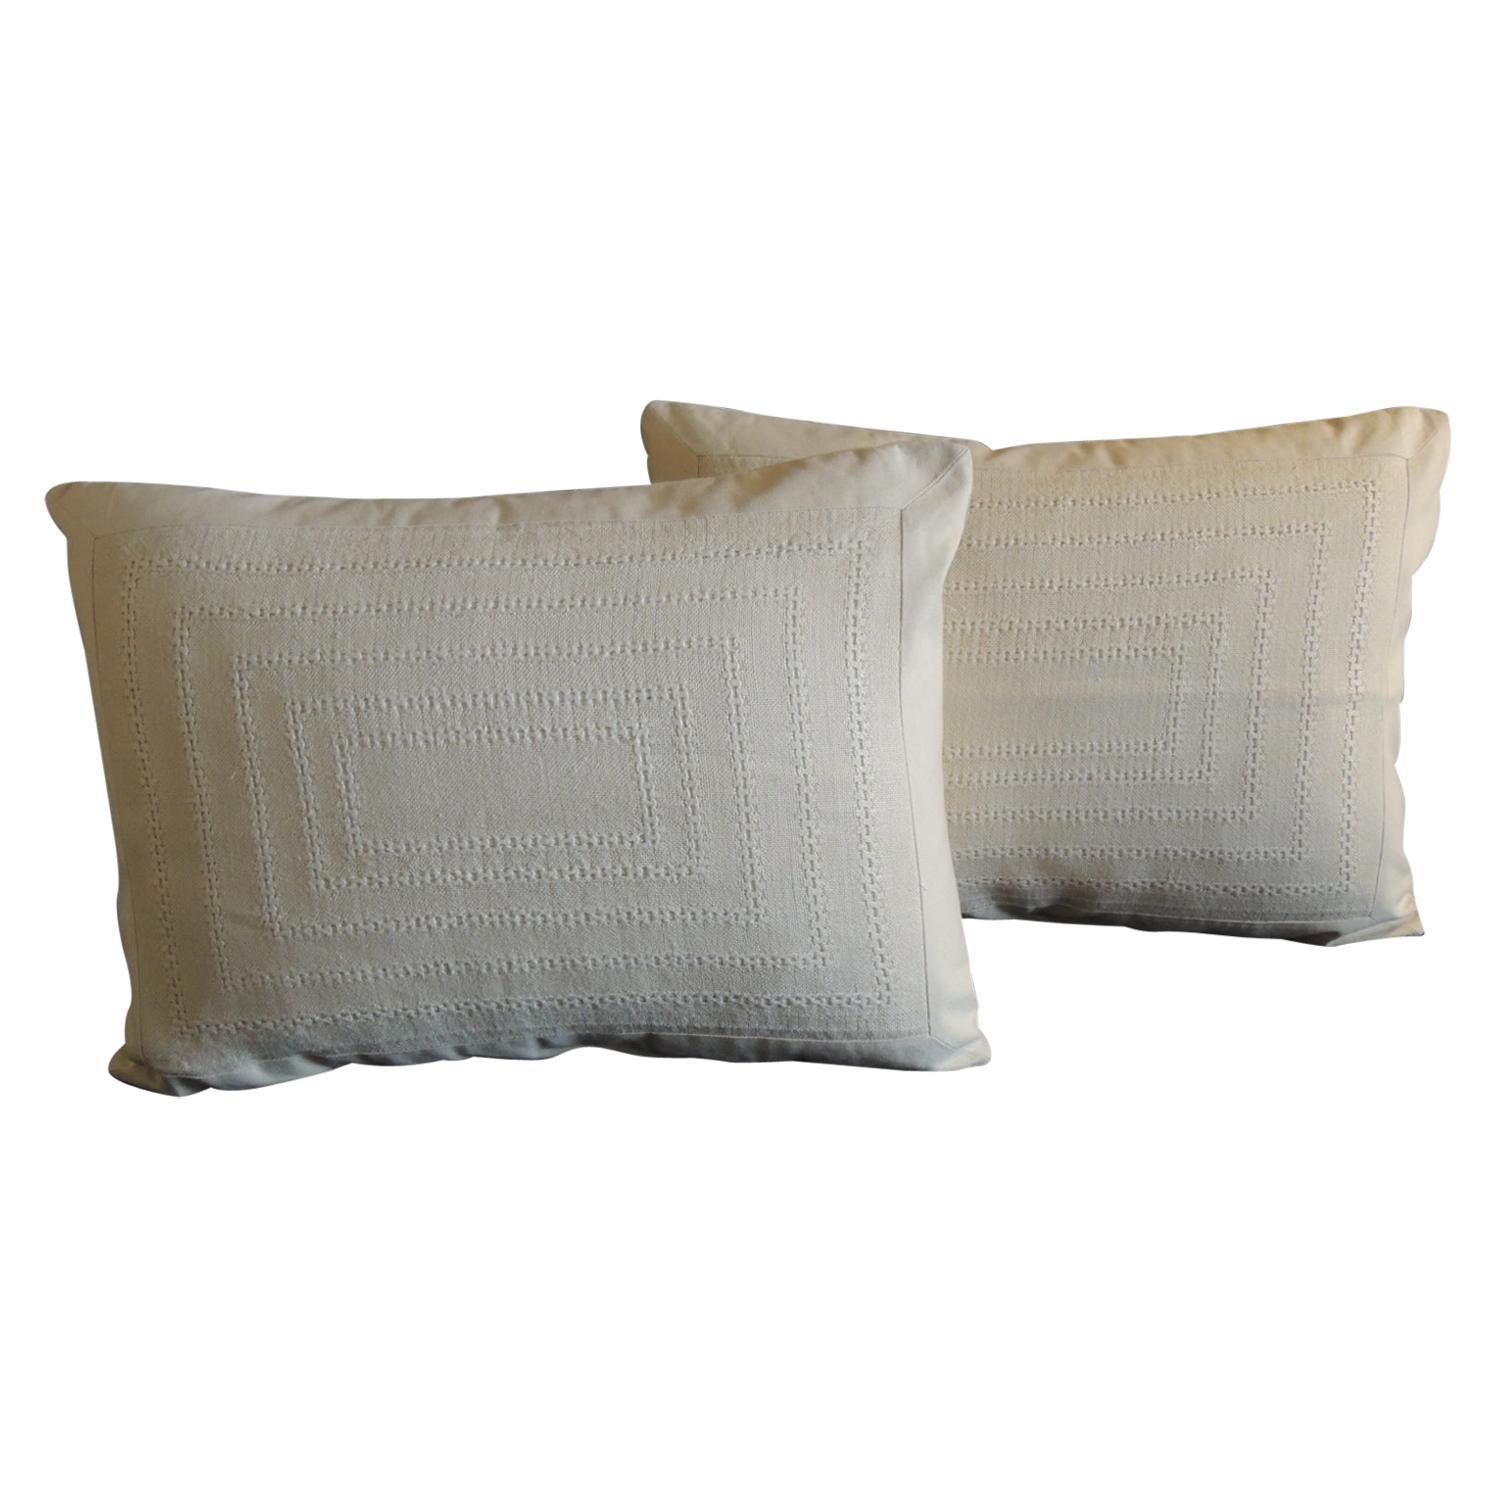 Pair of Tone-on-Tone Beige Eyelet Linen Decorative Bolster Pillows